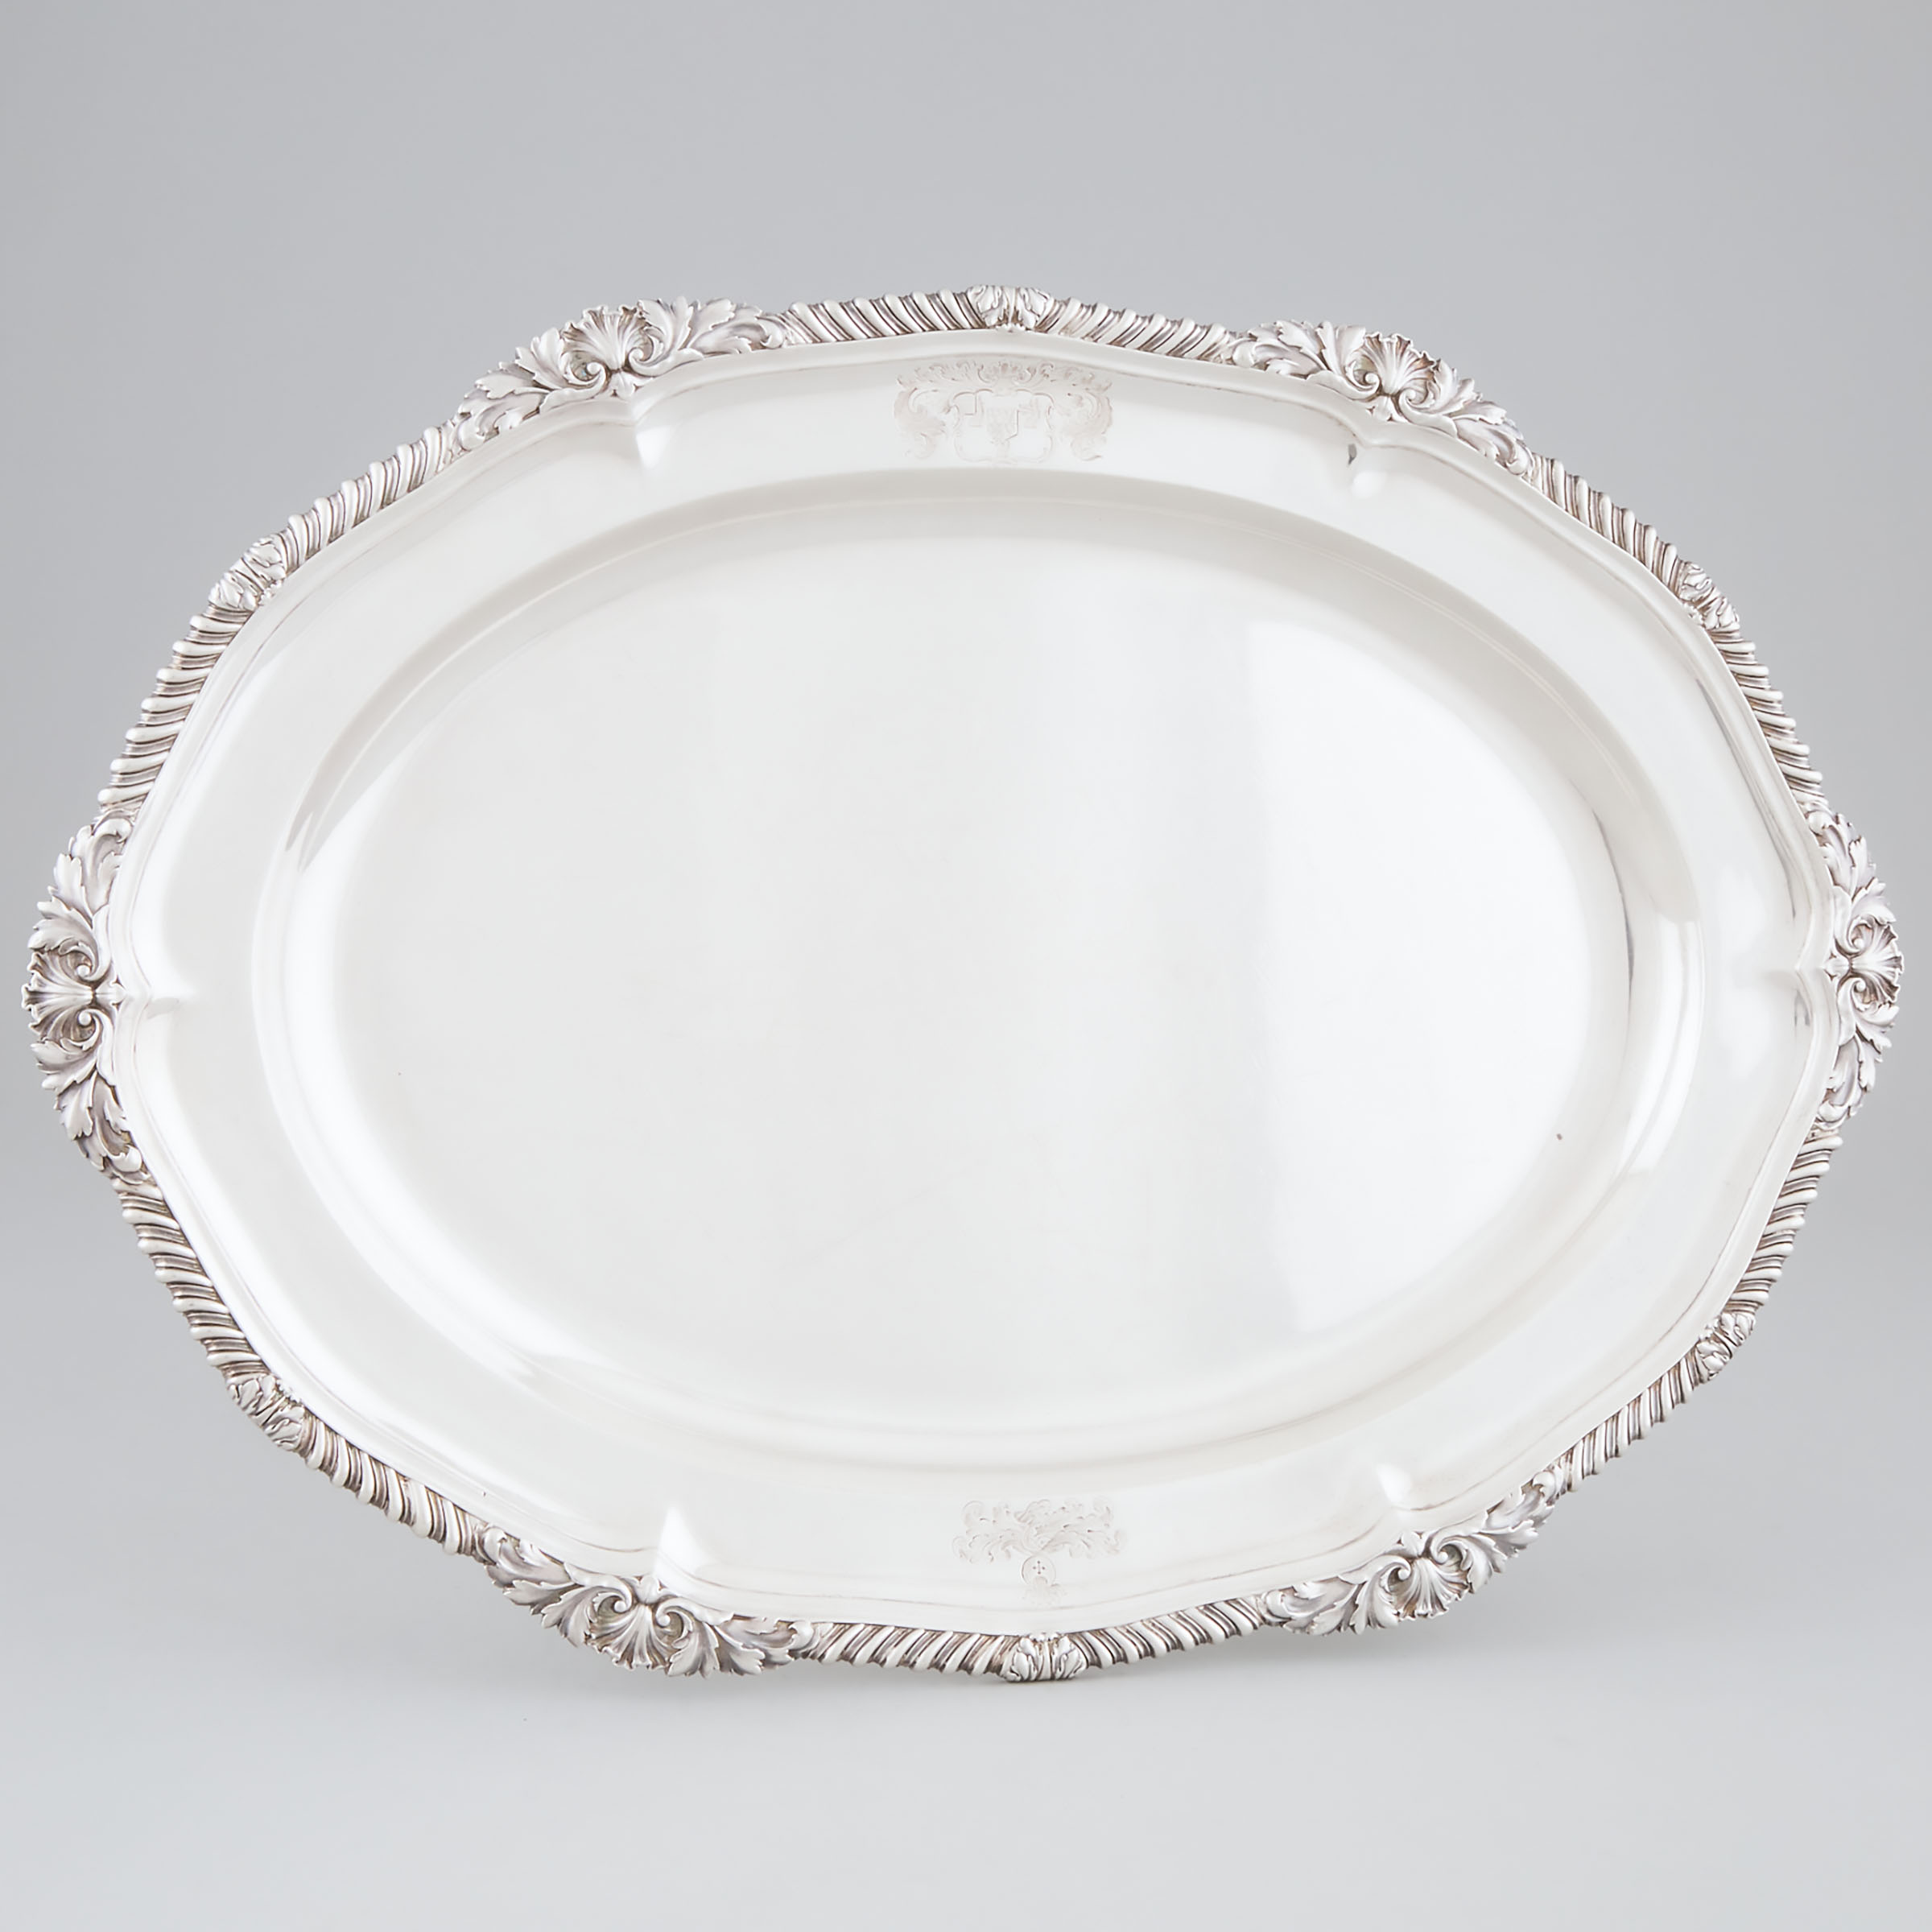 George IV Silver Shaped Oval Platter, Paul Storr, London, 1824